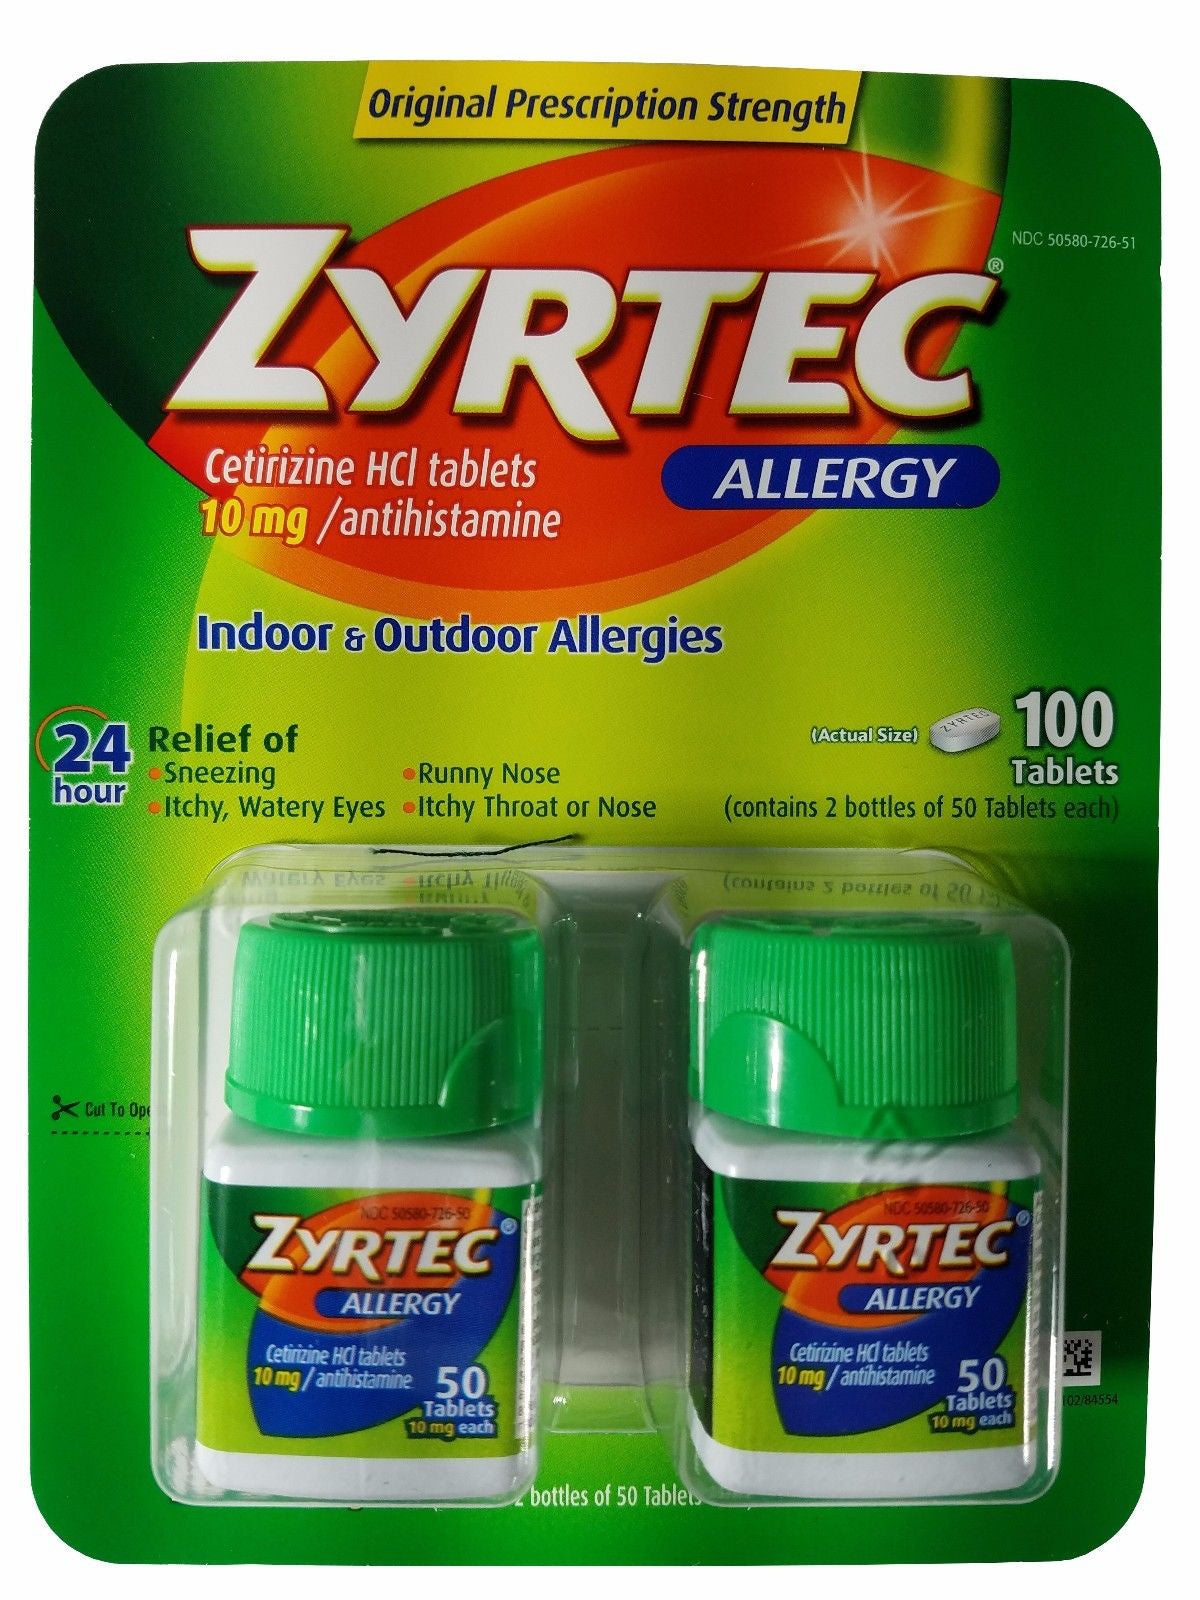 Zyrtec Allergy Cetirizine Hci 10mg Antihistamine 24hr Relief 100 Tabl